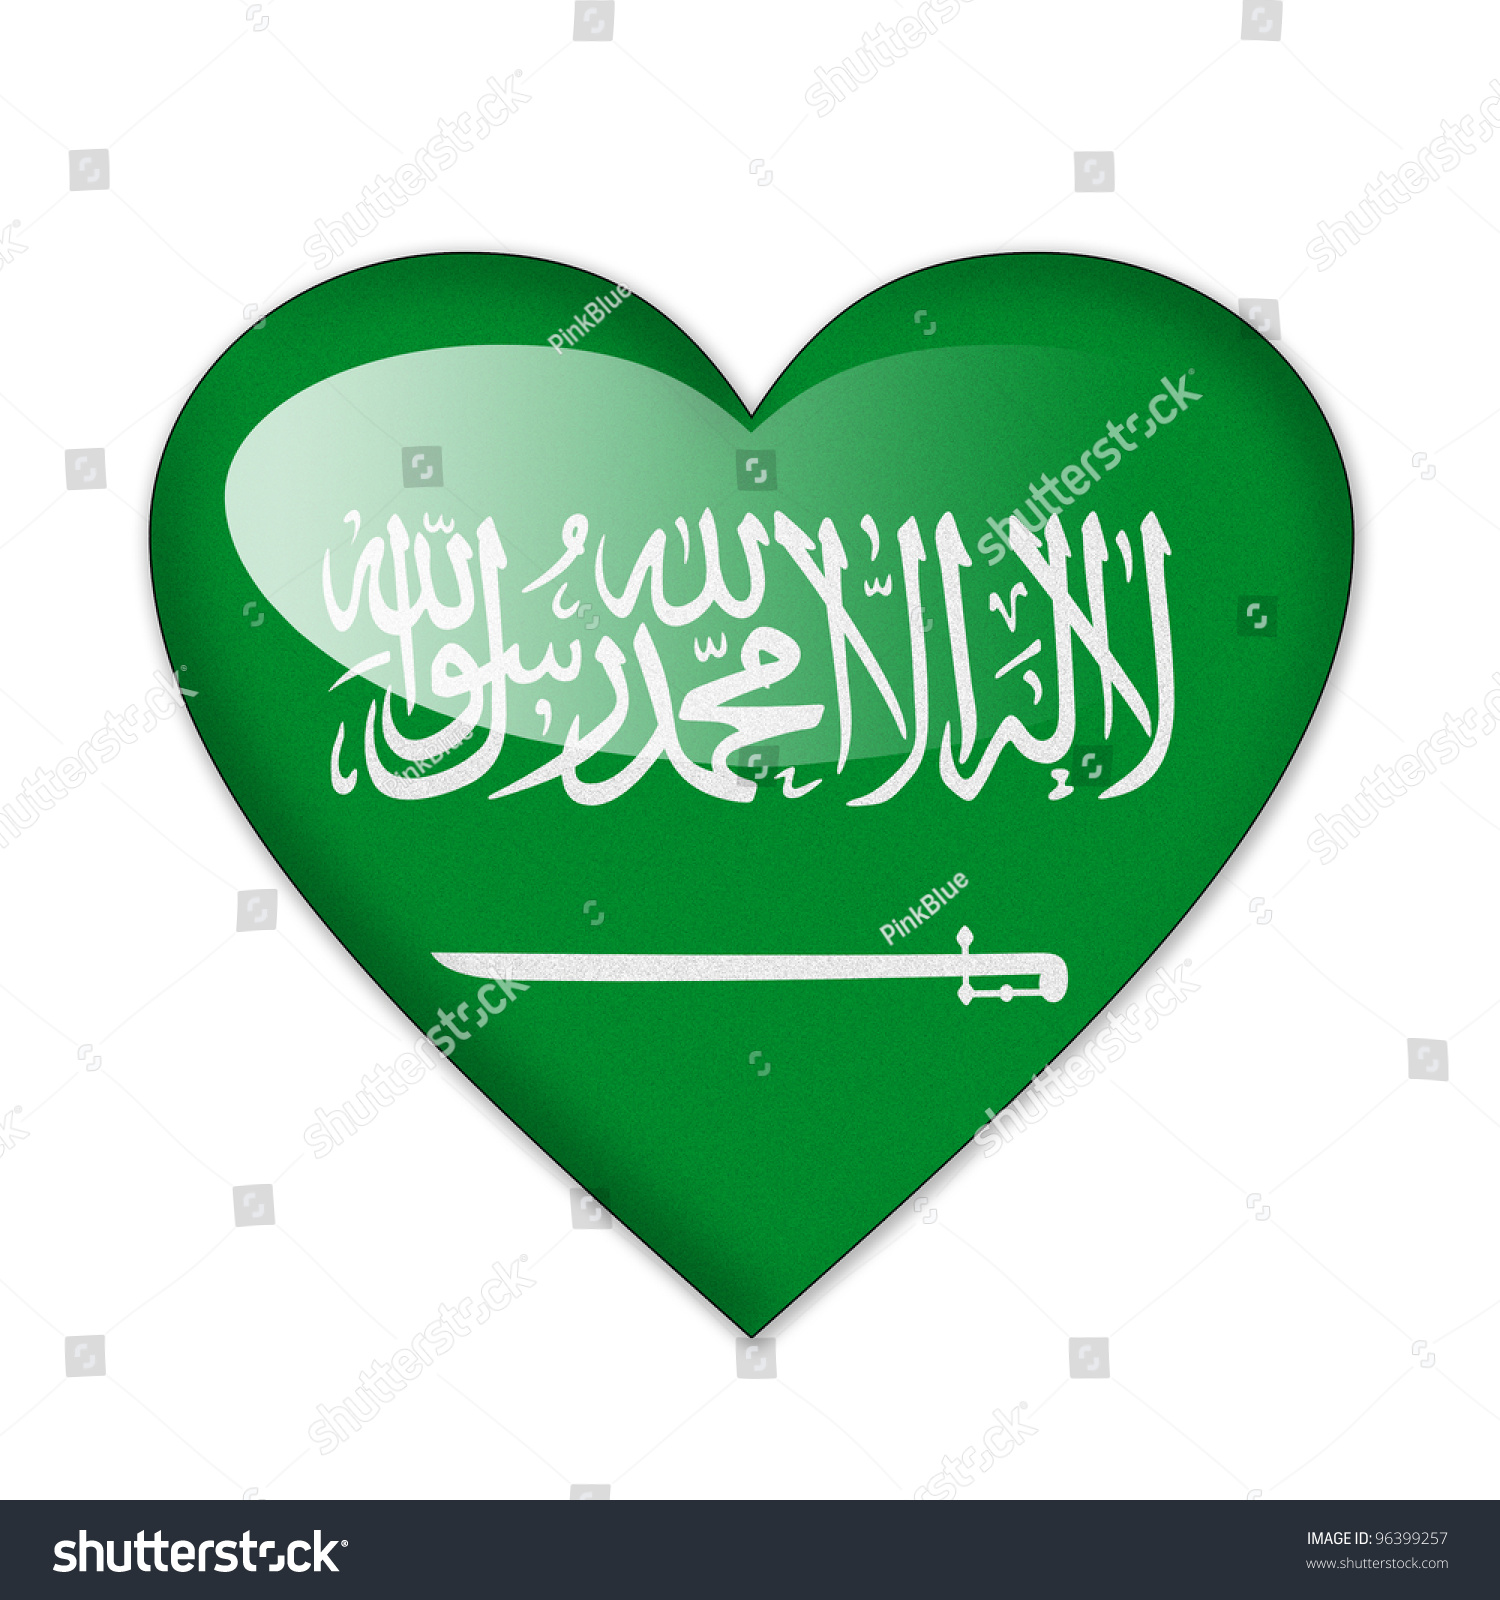 Saudi Arabia Flag In Heart Shape Isolated On White Background Stock ...